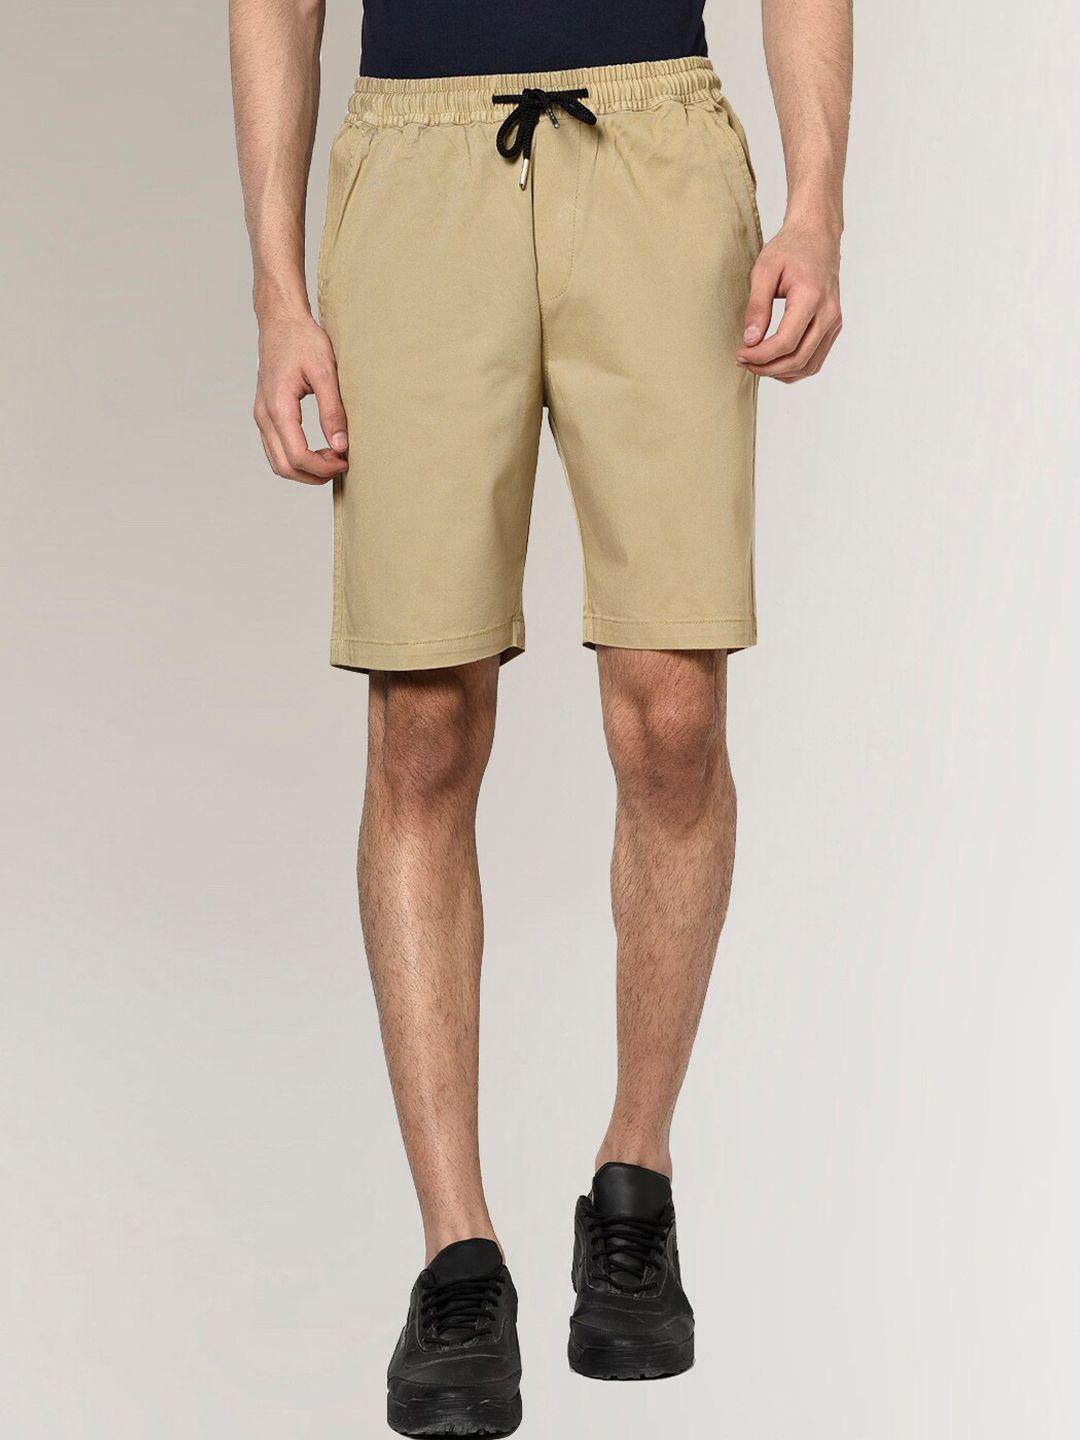 peppyzone men cotton sports shorts